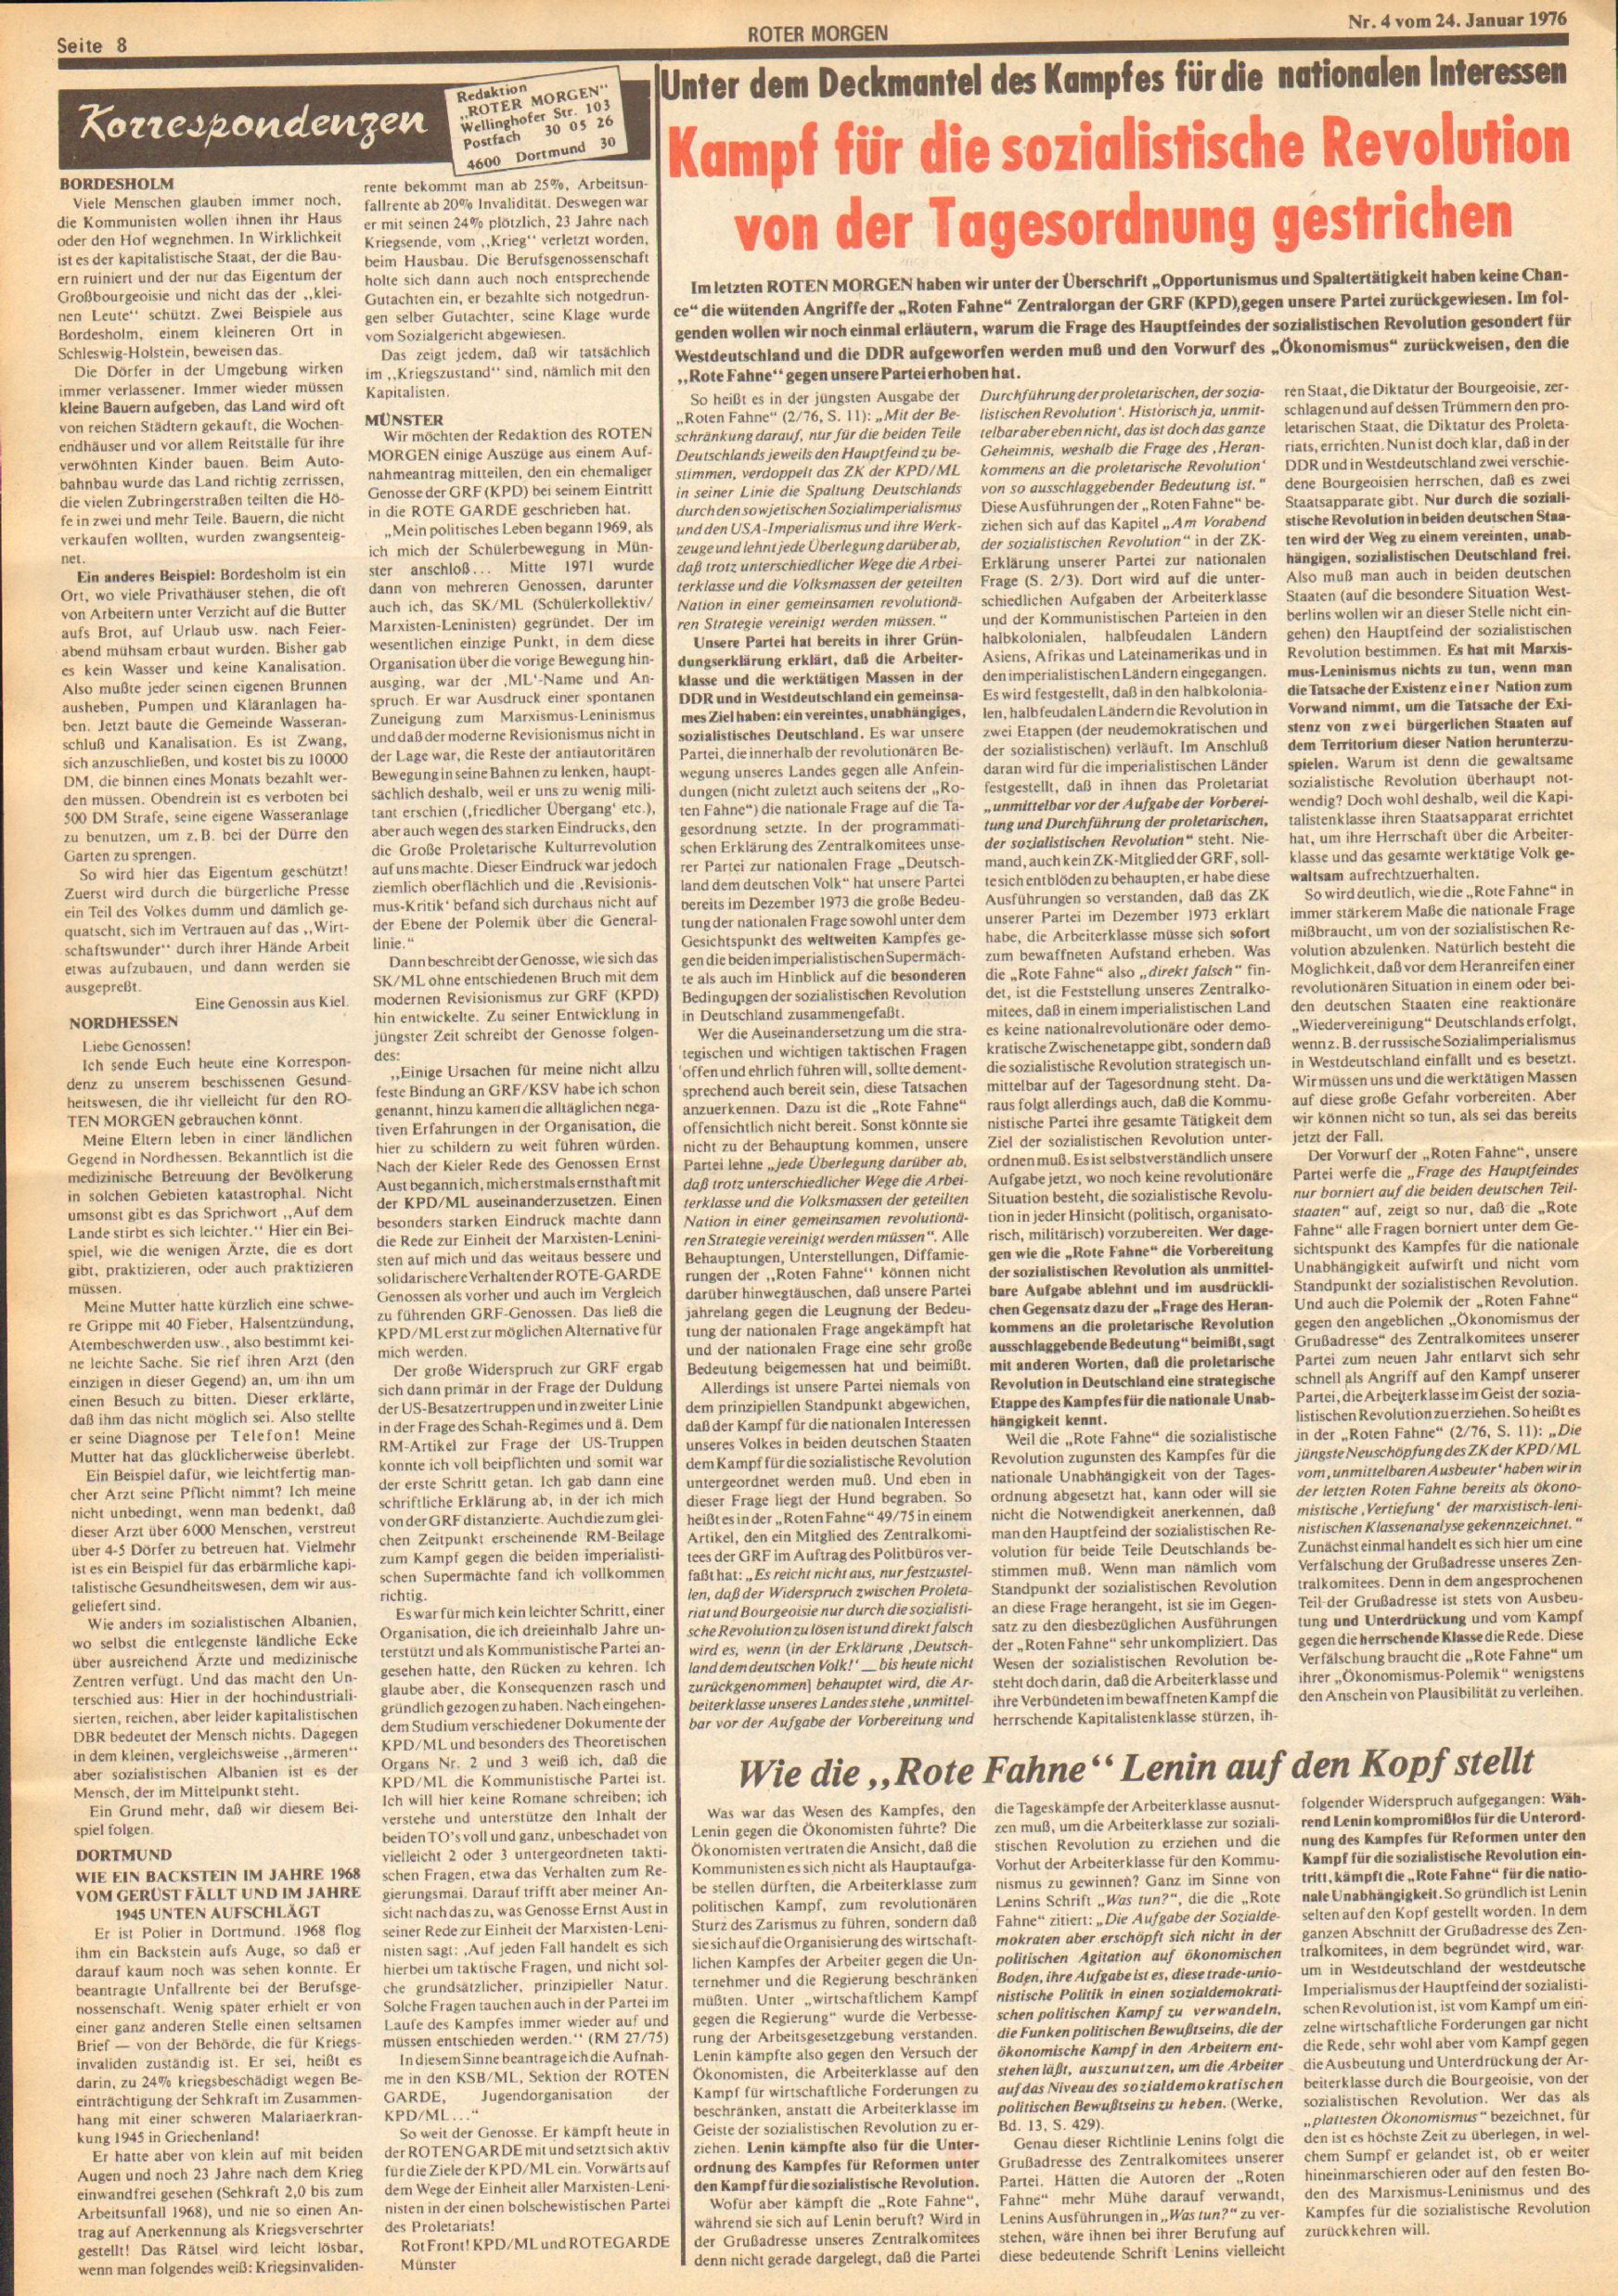 Roter Morgen, 10. Jg., 24. Januar 1976, Nr. 4, Seite 8